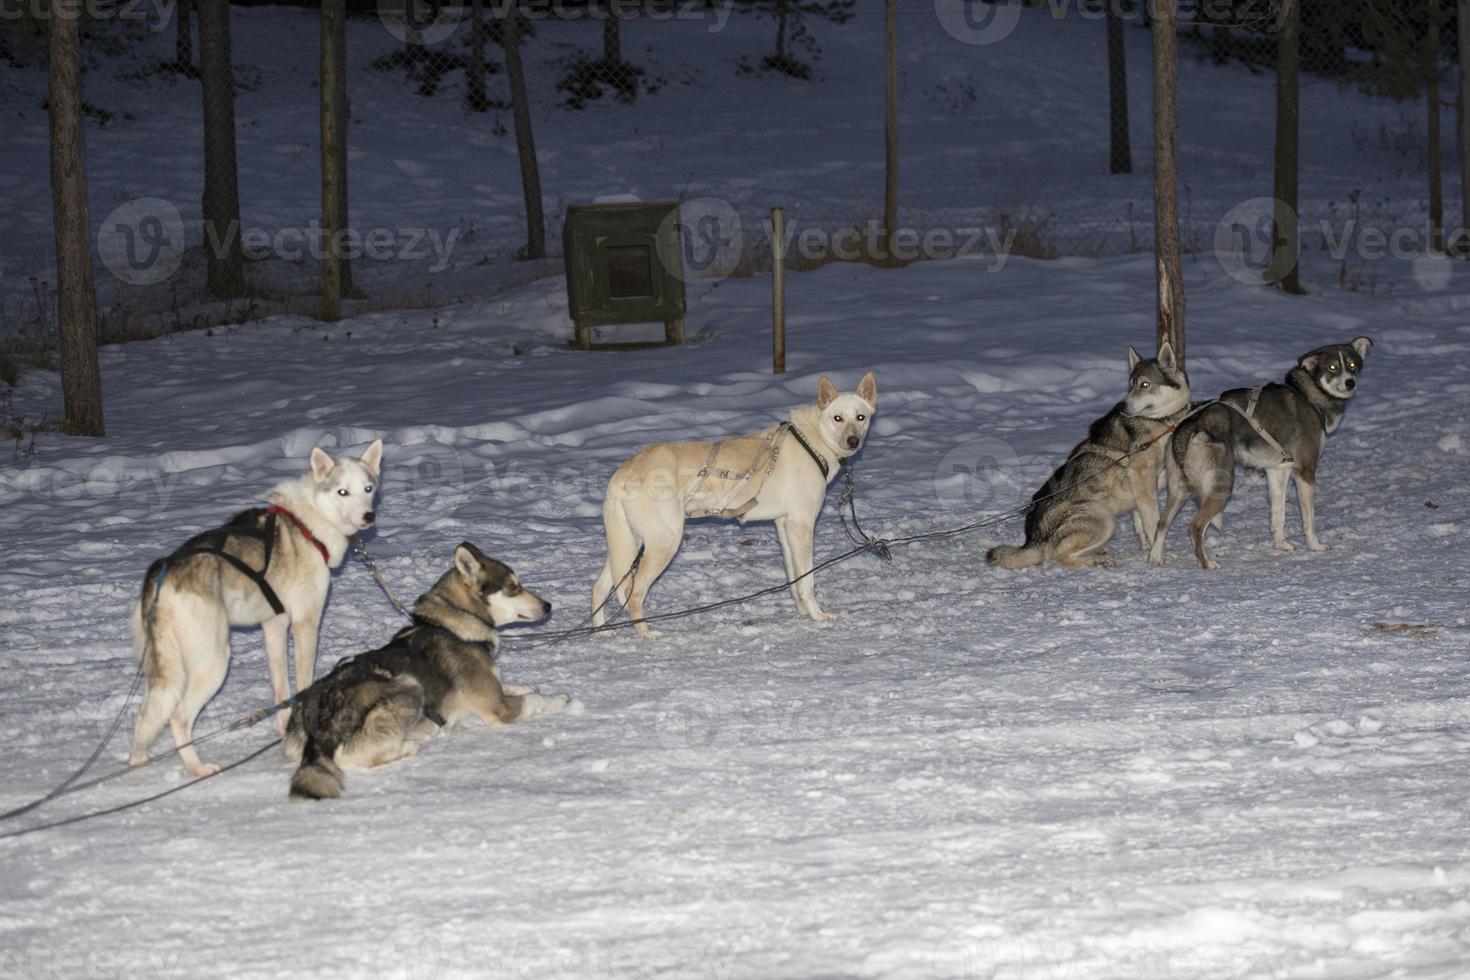 sledding med kälke hund i lappland i vinter- tid foto